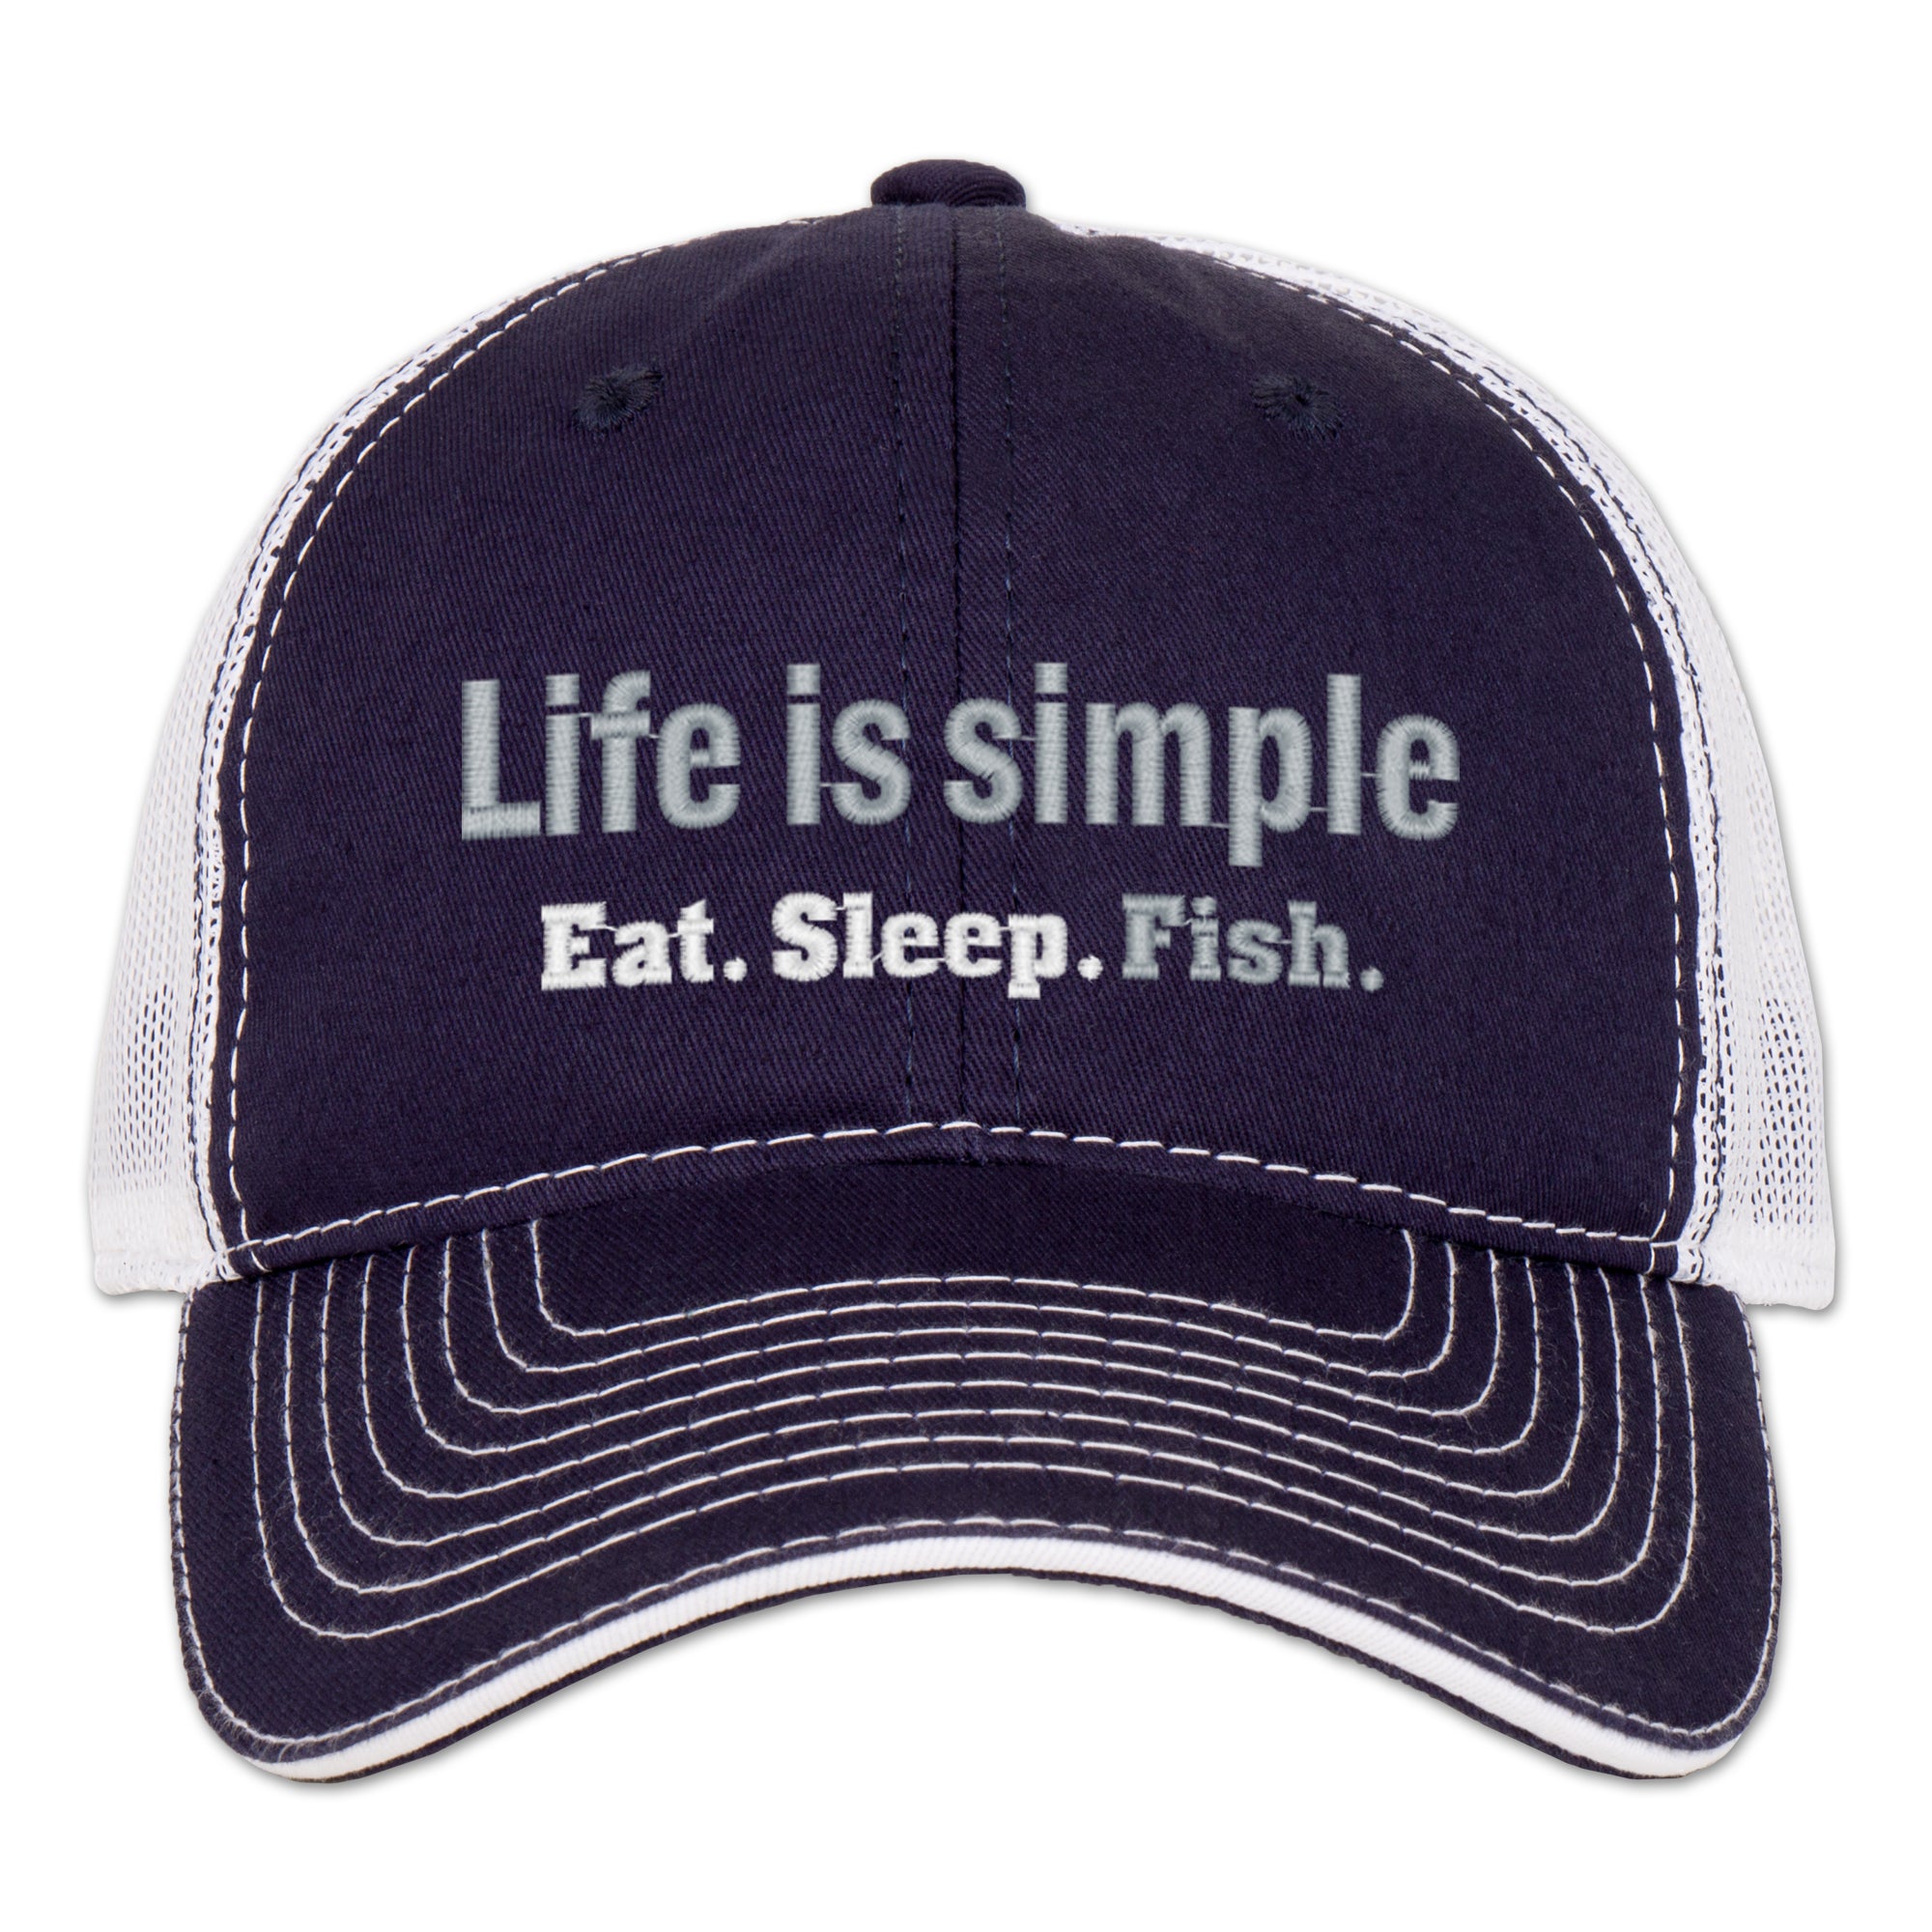 Earth Sun Moon Life Is Simple - Fish Trucker Hat - Navy/White - Adjustable